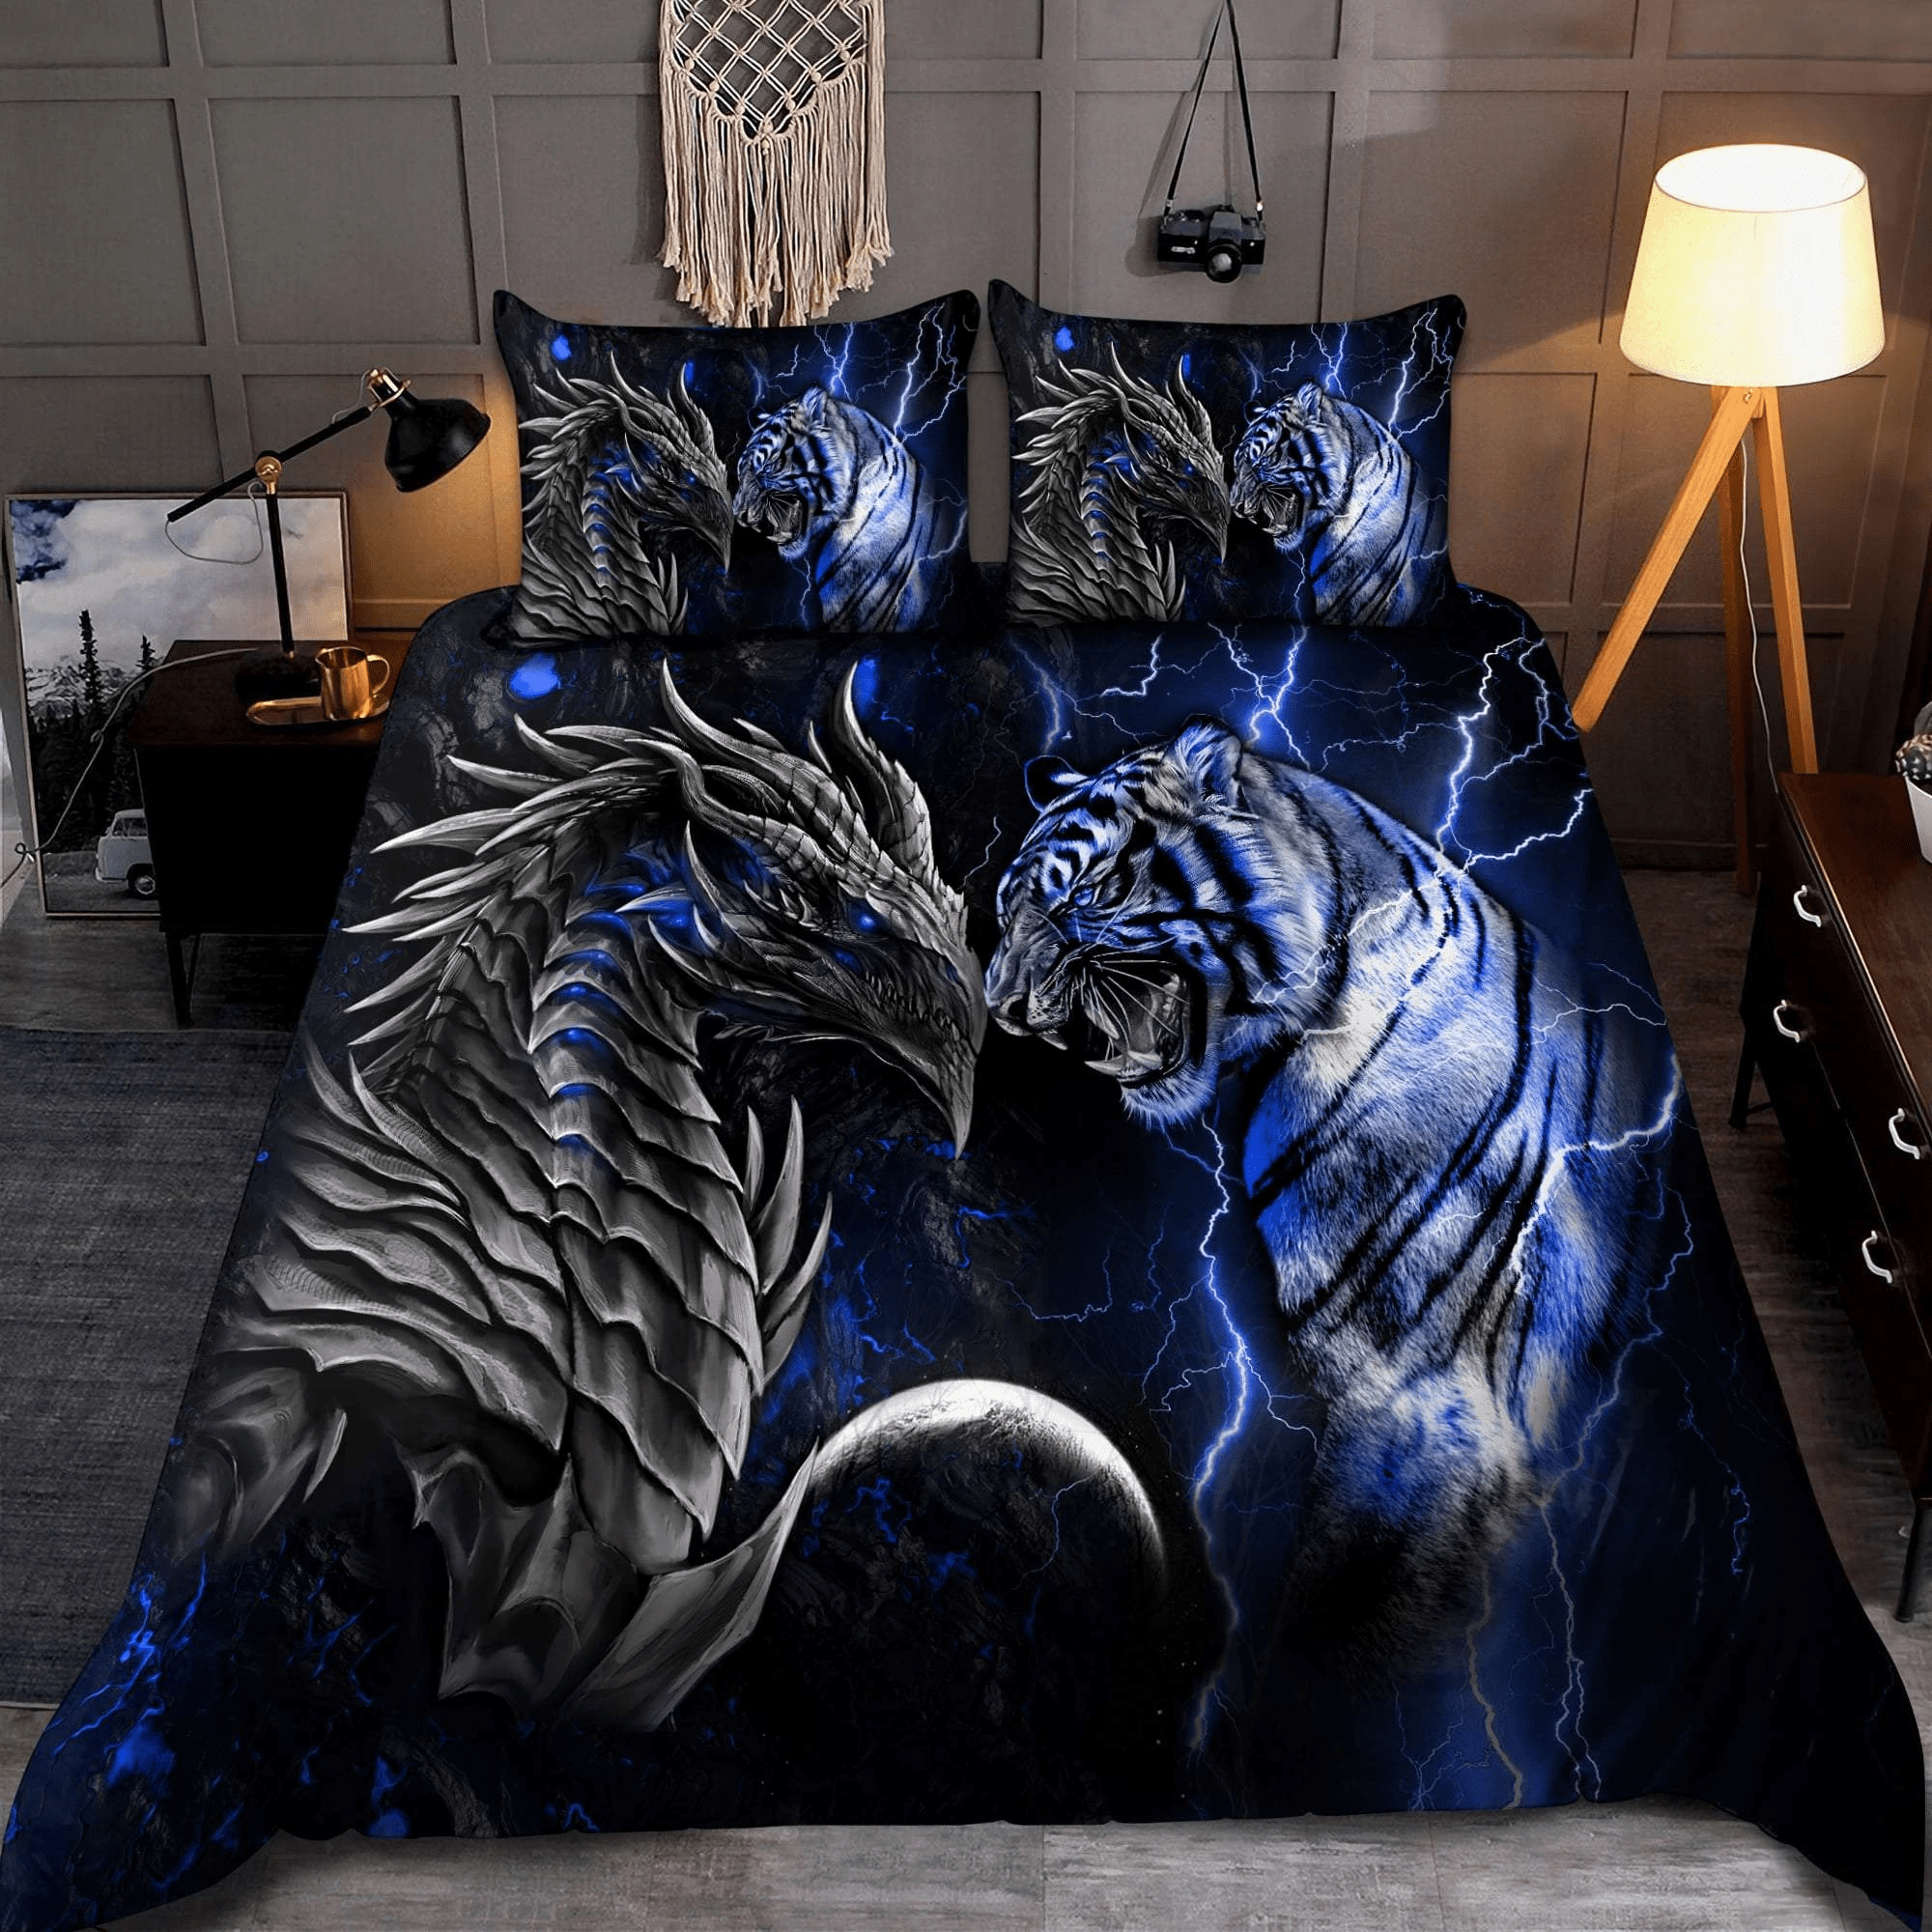 Blue Dragon And Tiger Duvet Cover Bedding Set